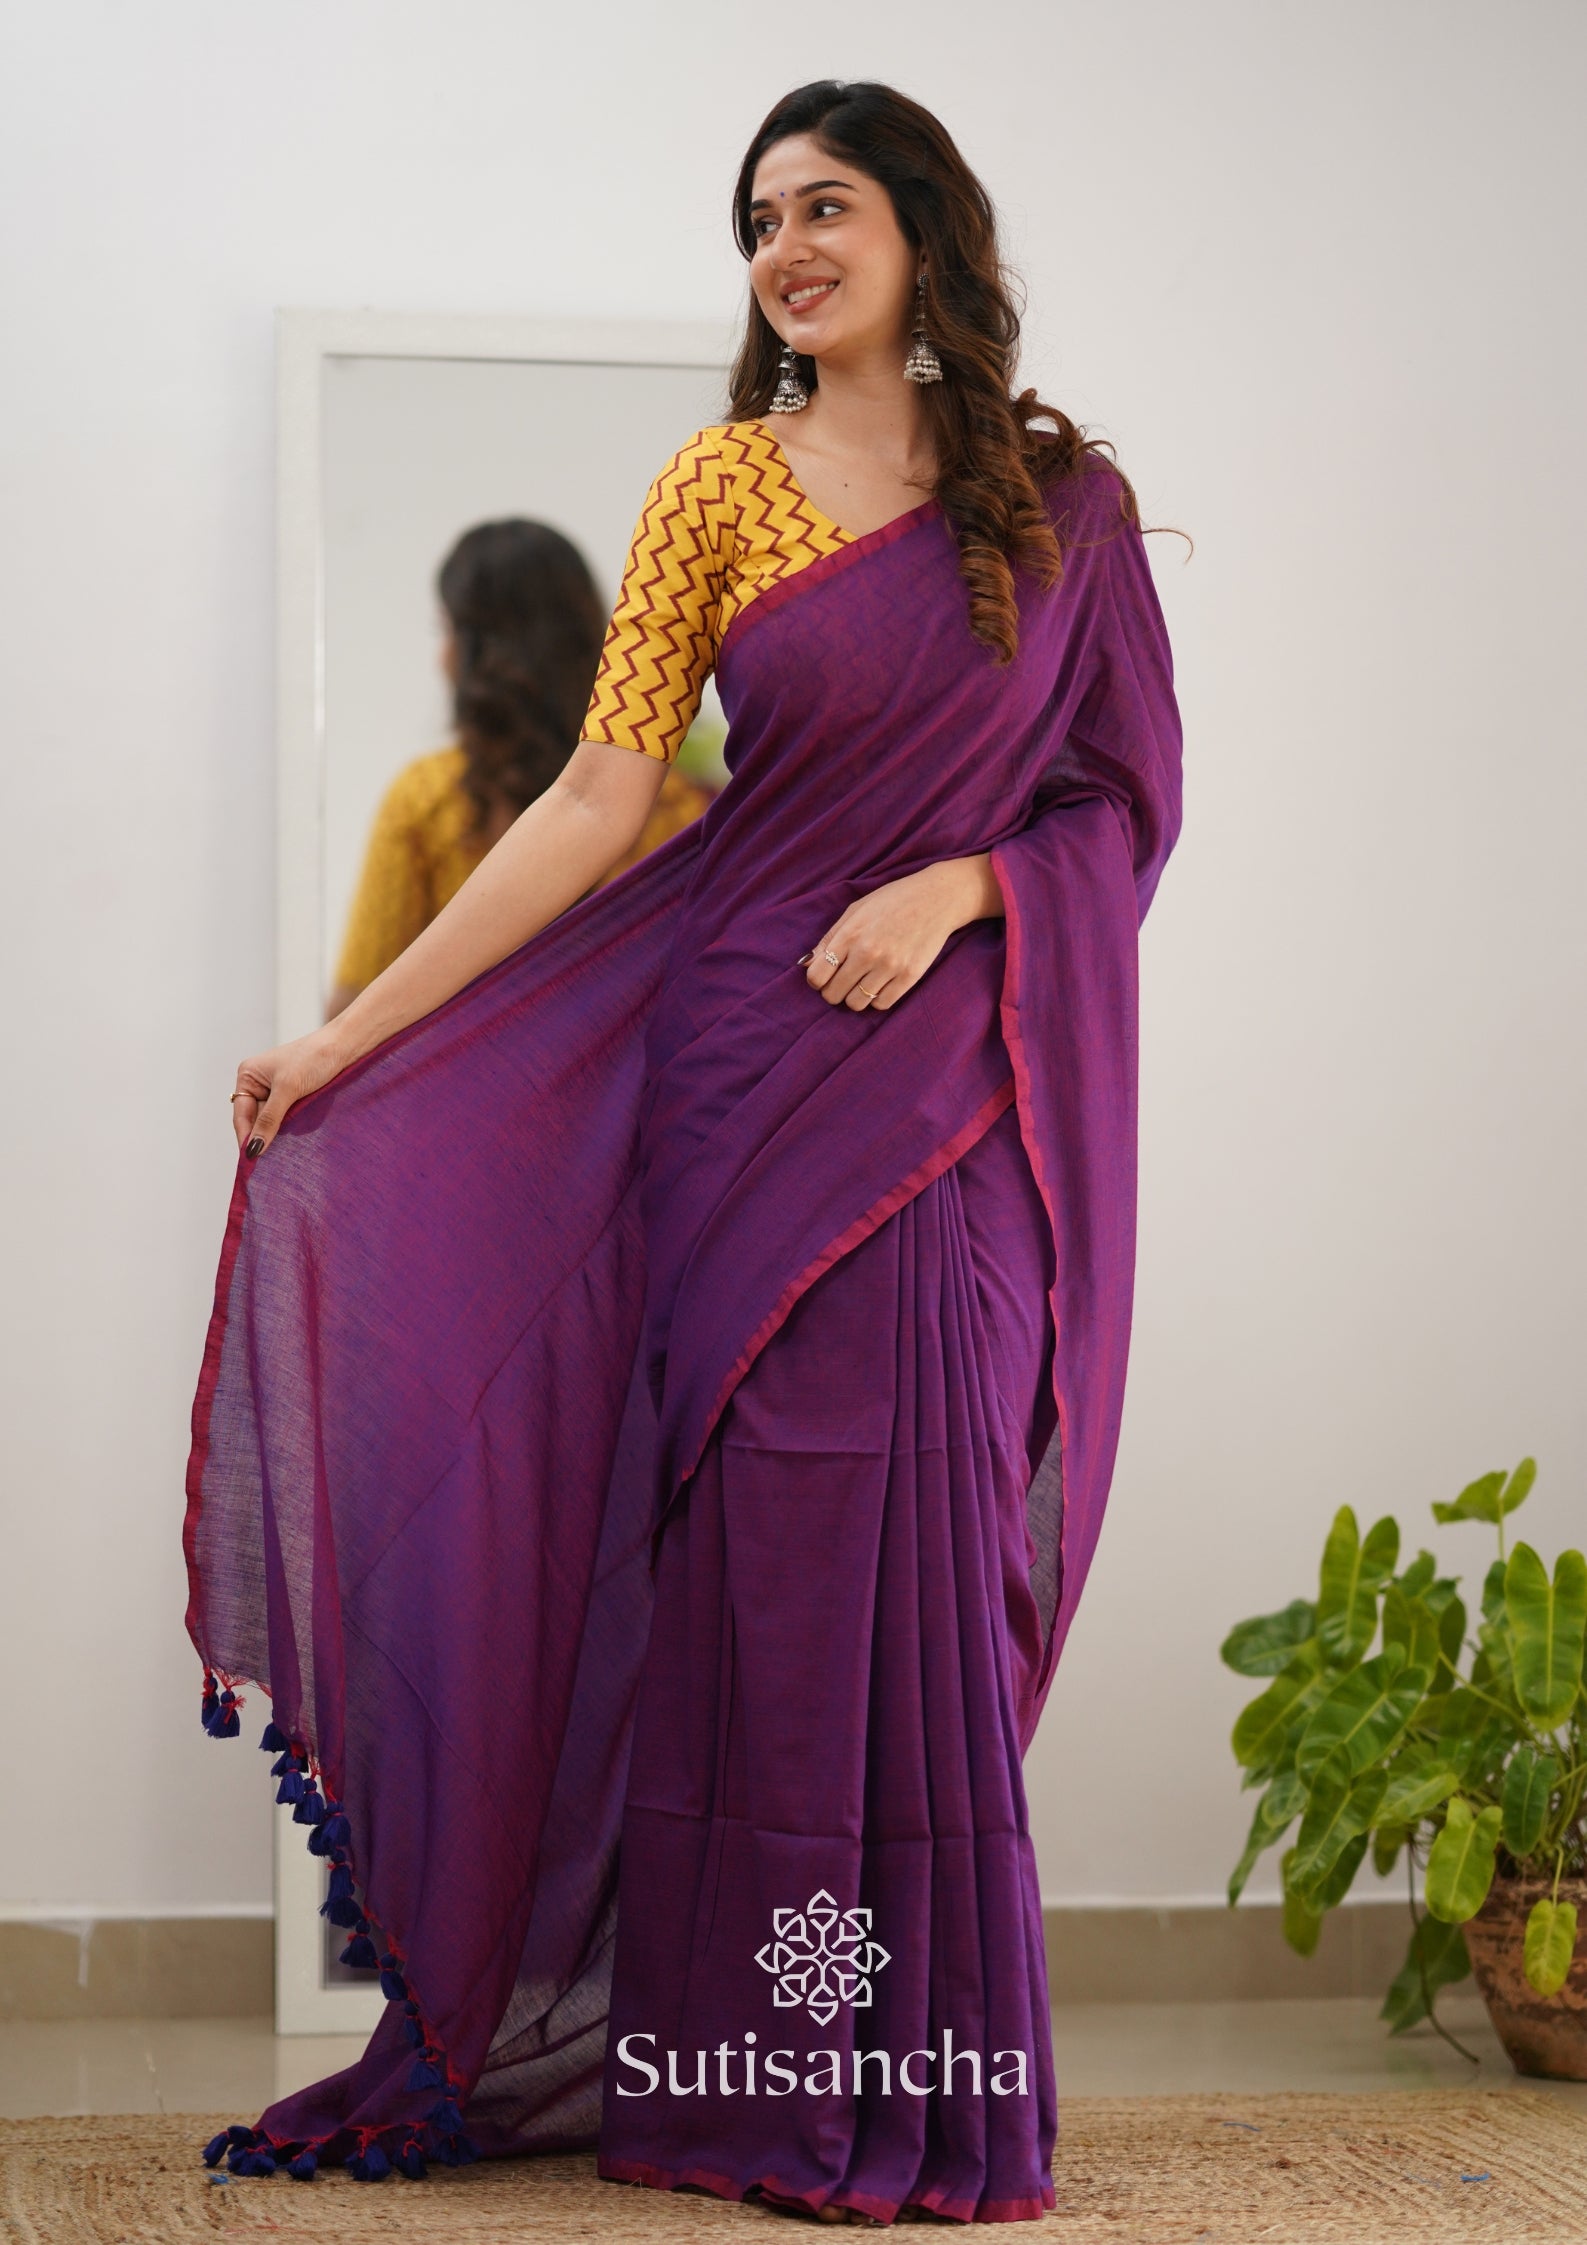 Sutisancha Dualtone Purple Khadi Saree